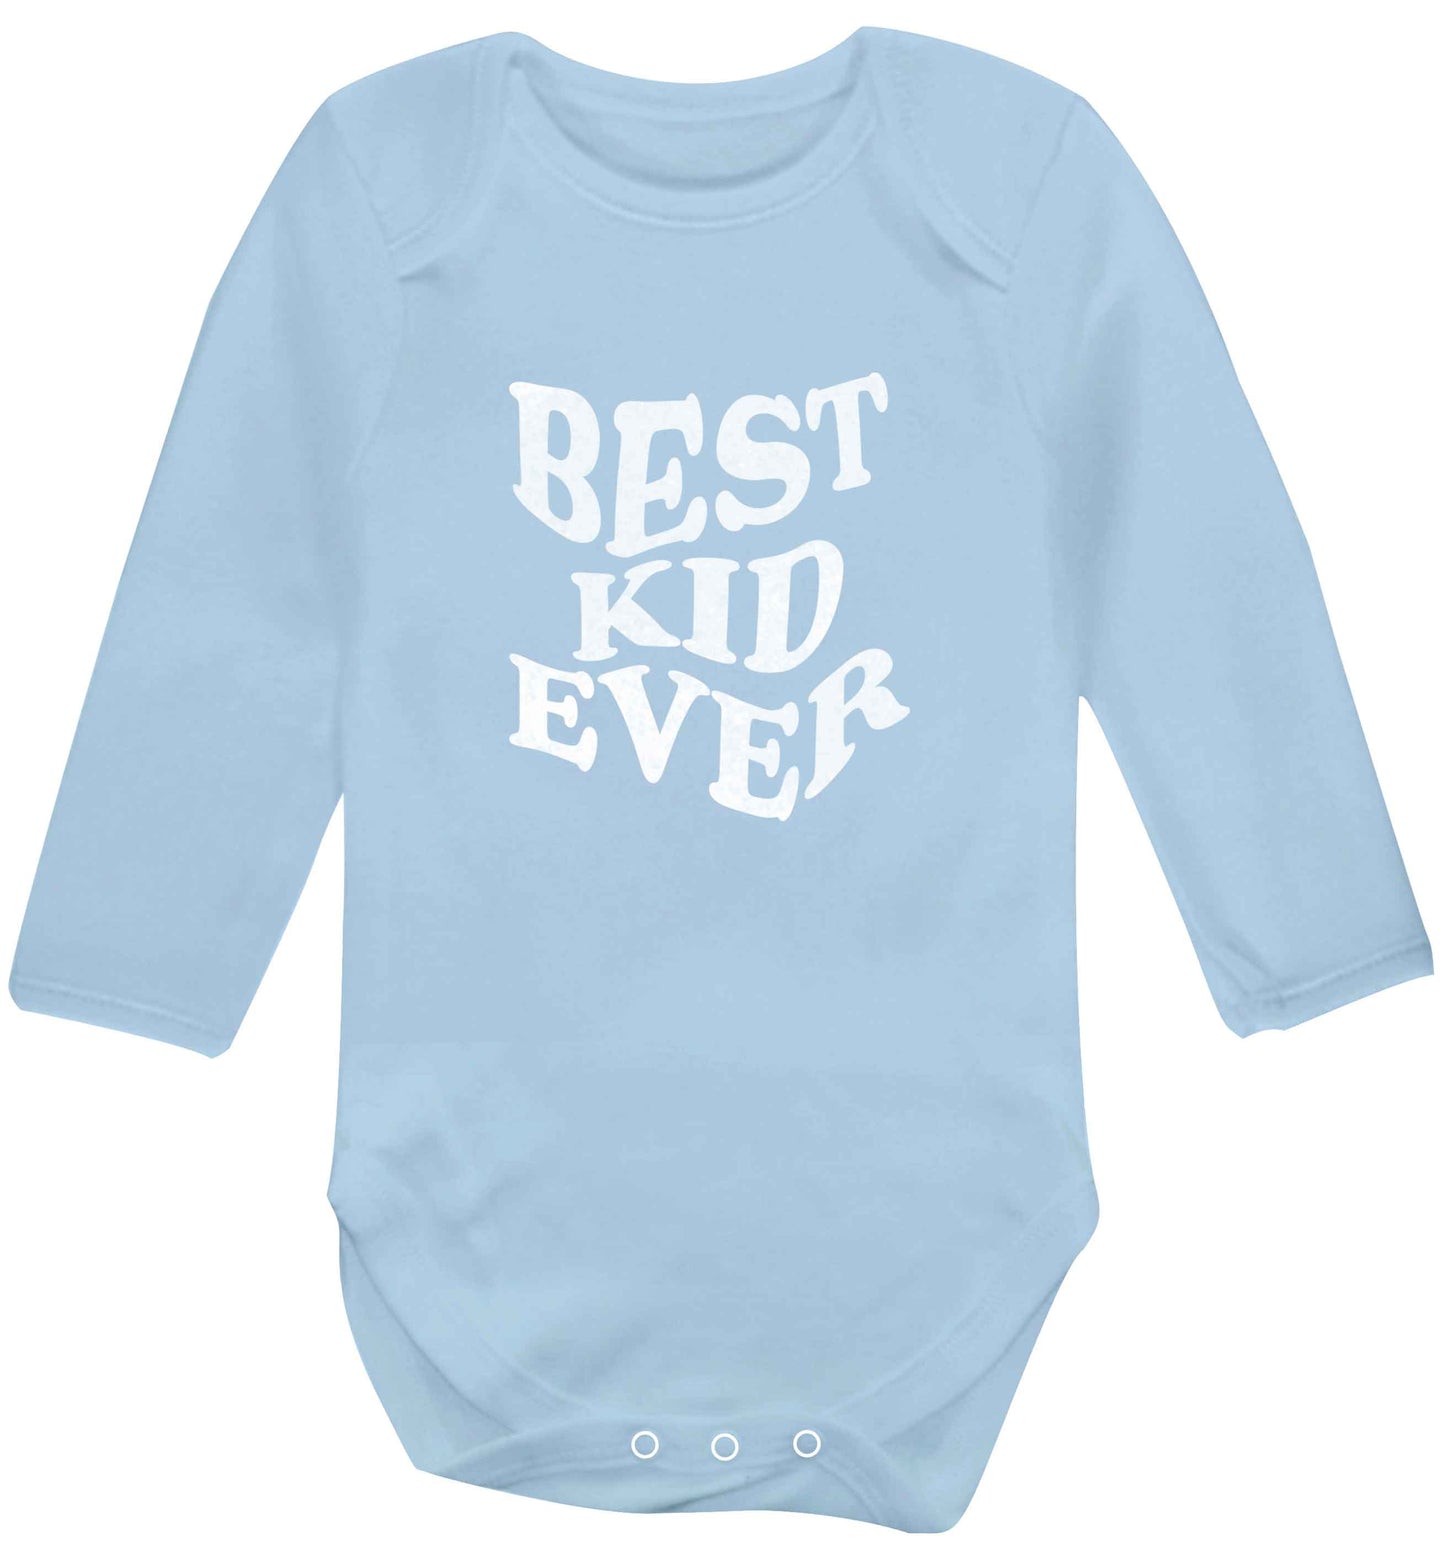 Best kid ever baby vest long sleeved pale blue 6-12 months